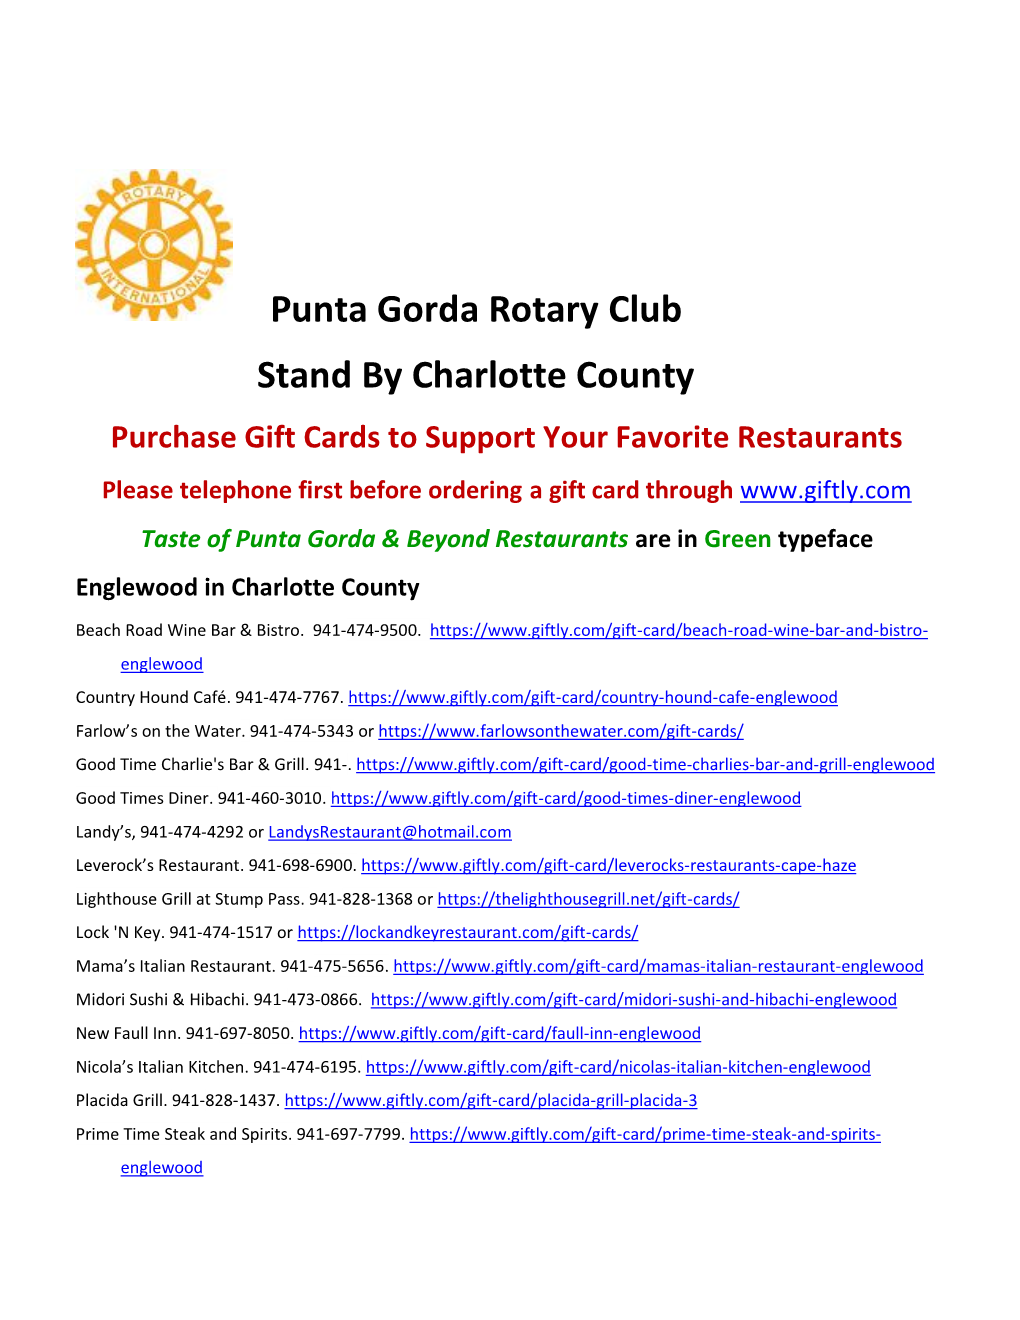 Punta Gorda Rotary Club Stand by Charlotte County